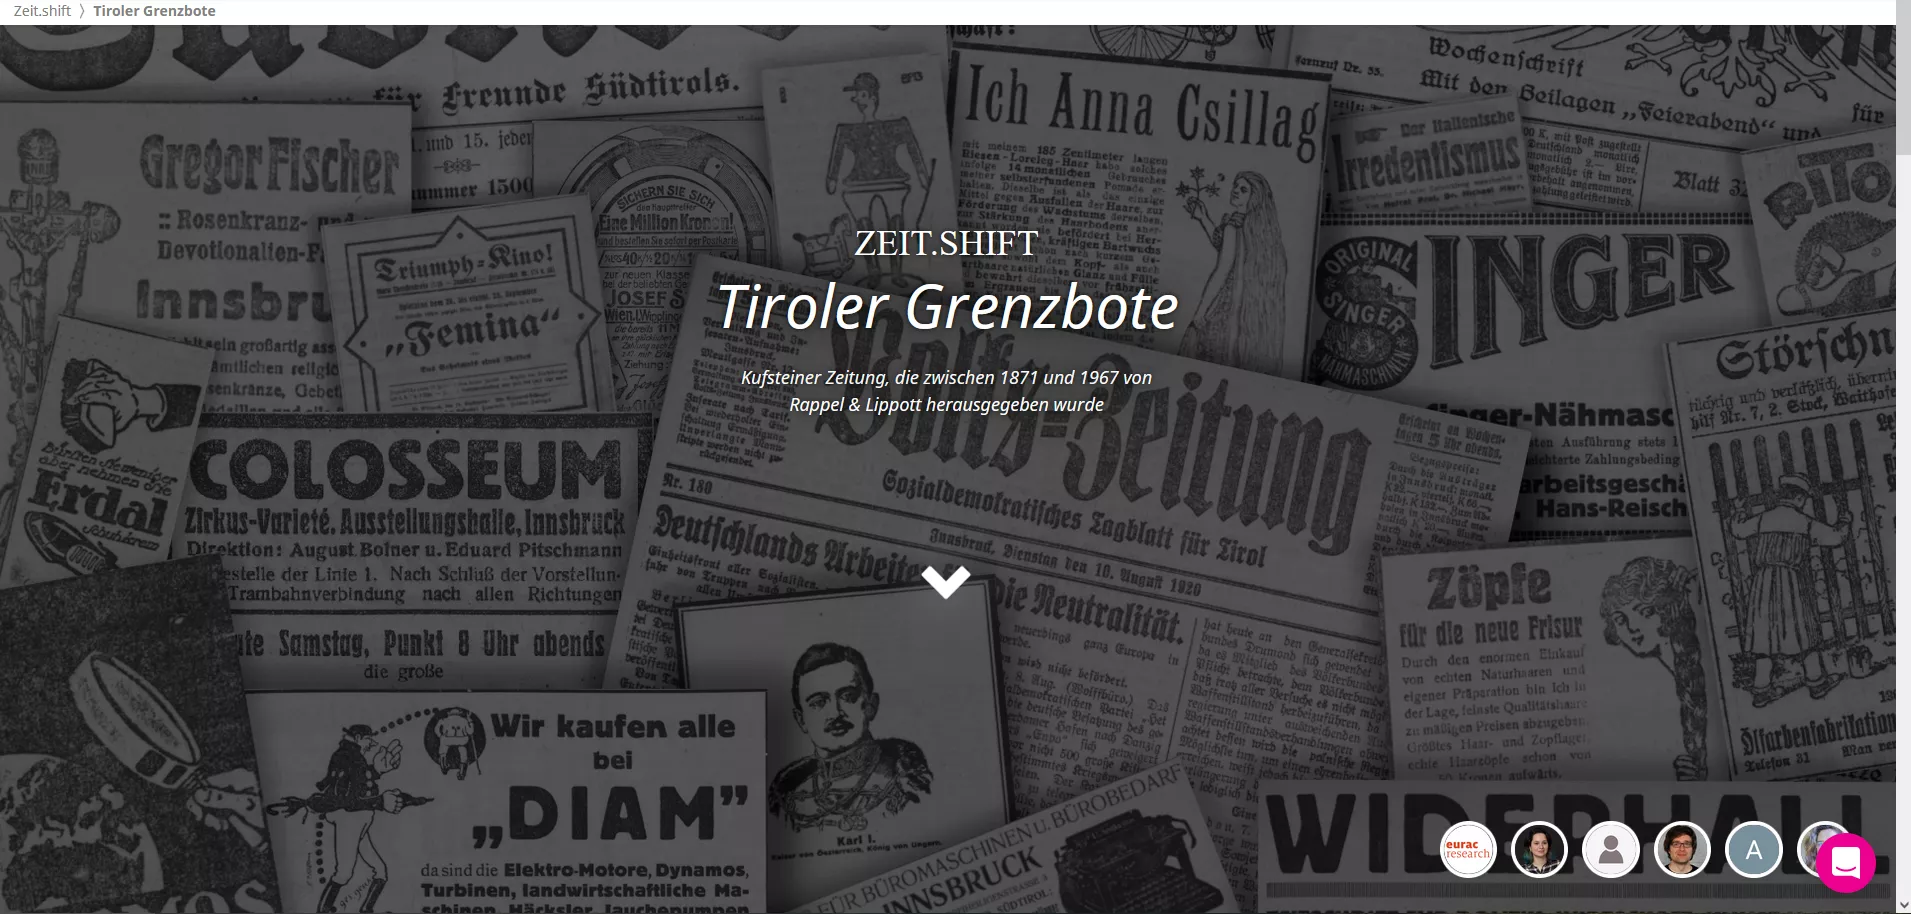 Landingpage der Untersammlung <strong>Tiroler Grenzbote</strong> in Zeit.shift.